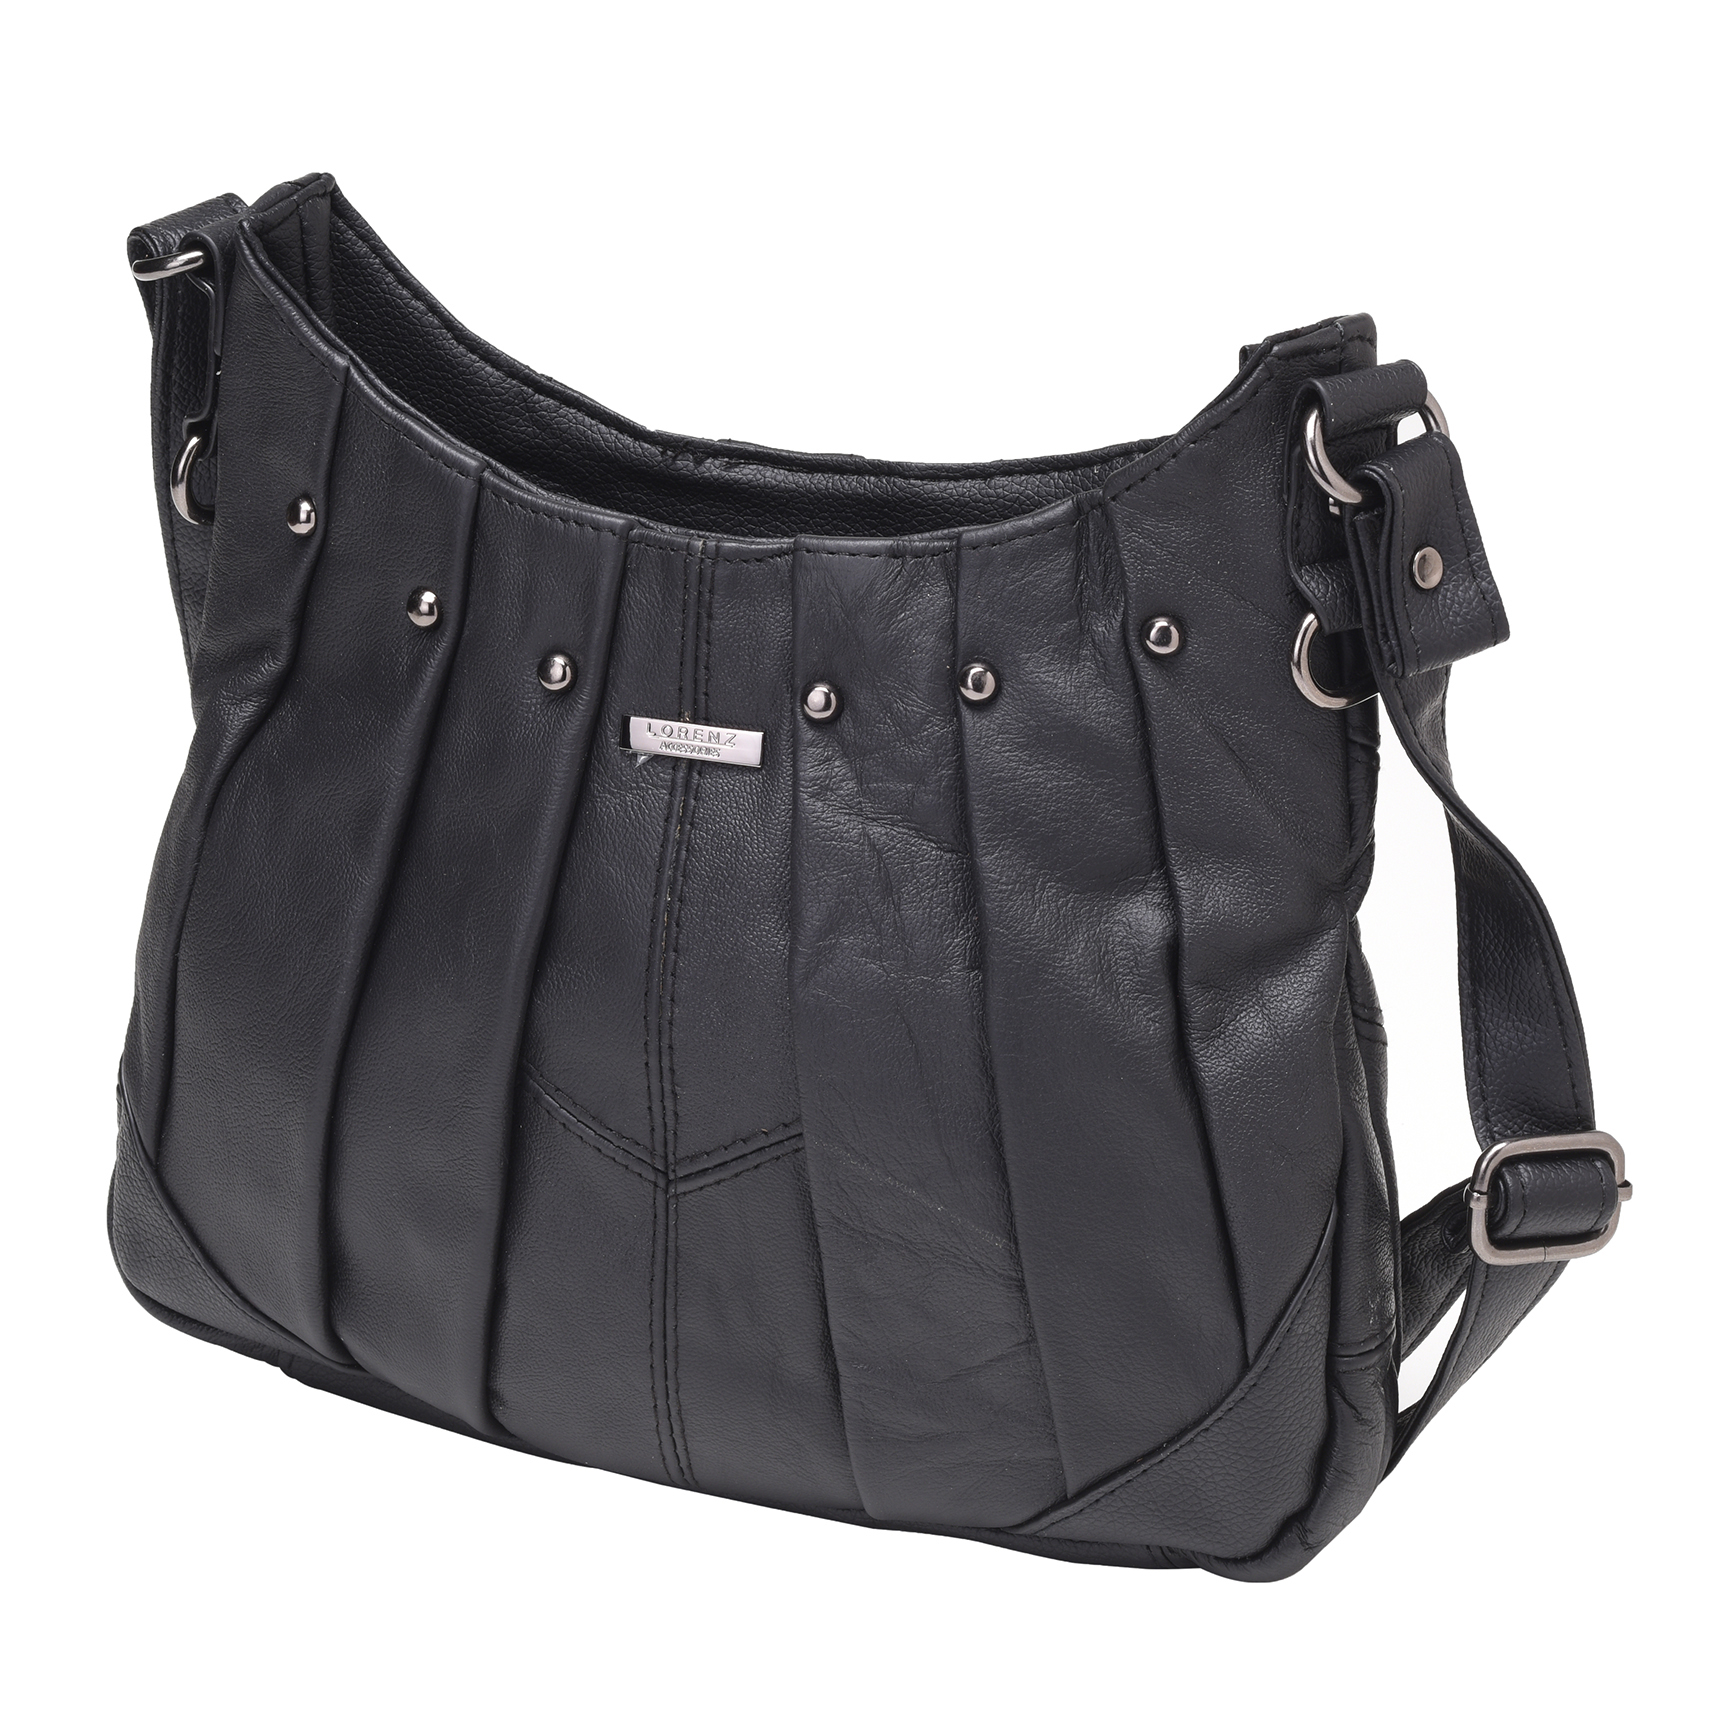 Black Small Leather Handbag Purse Across Body Travel Organiser Bag by Lorenz 